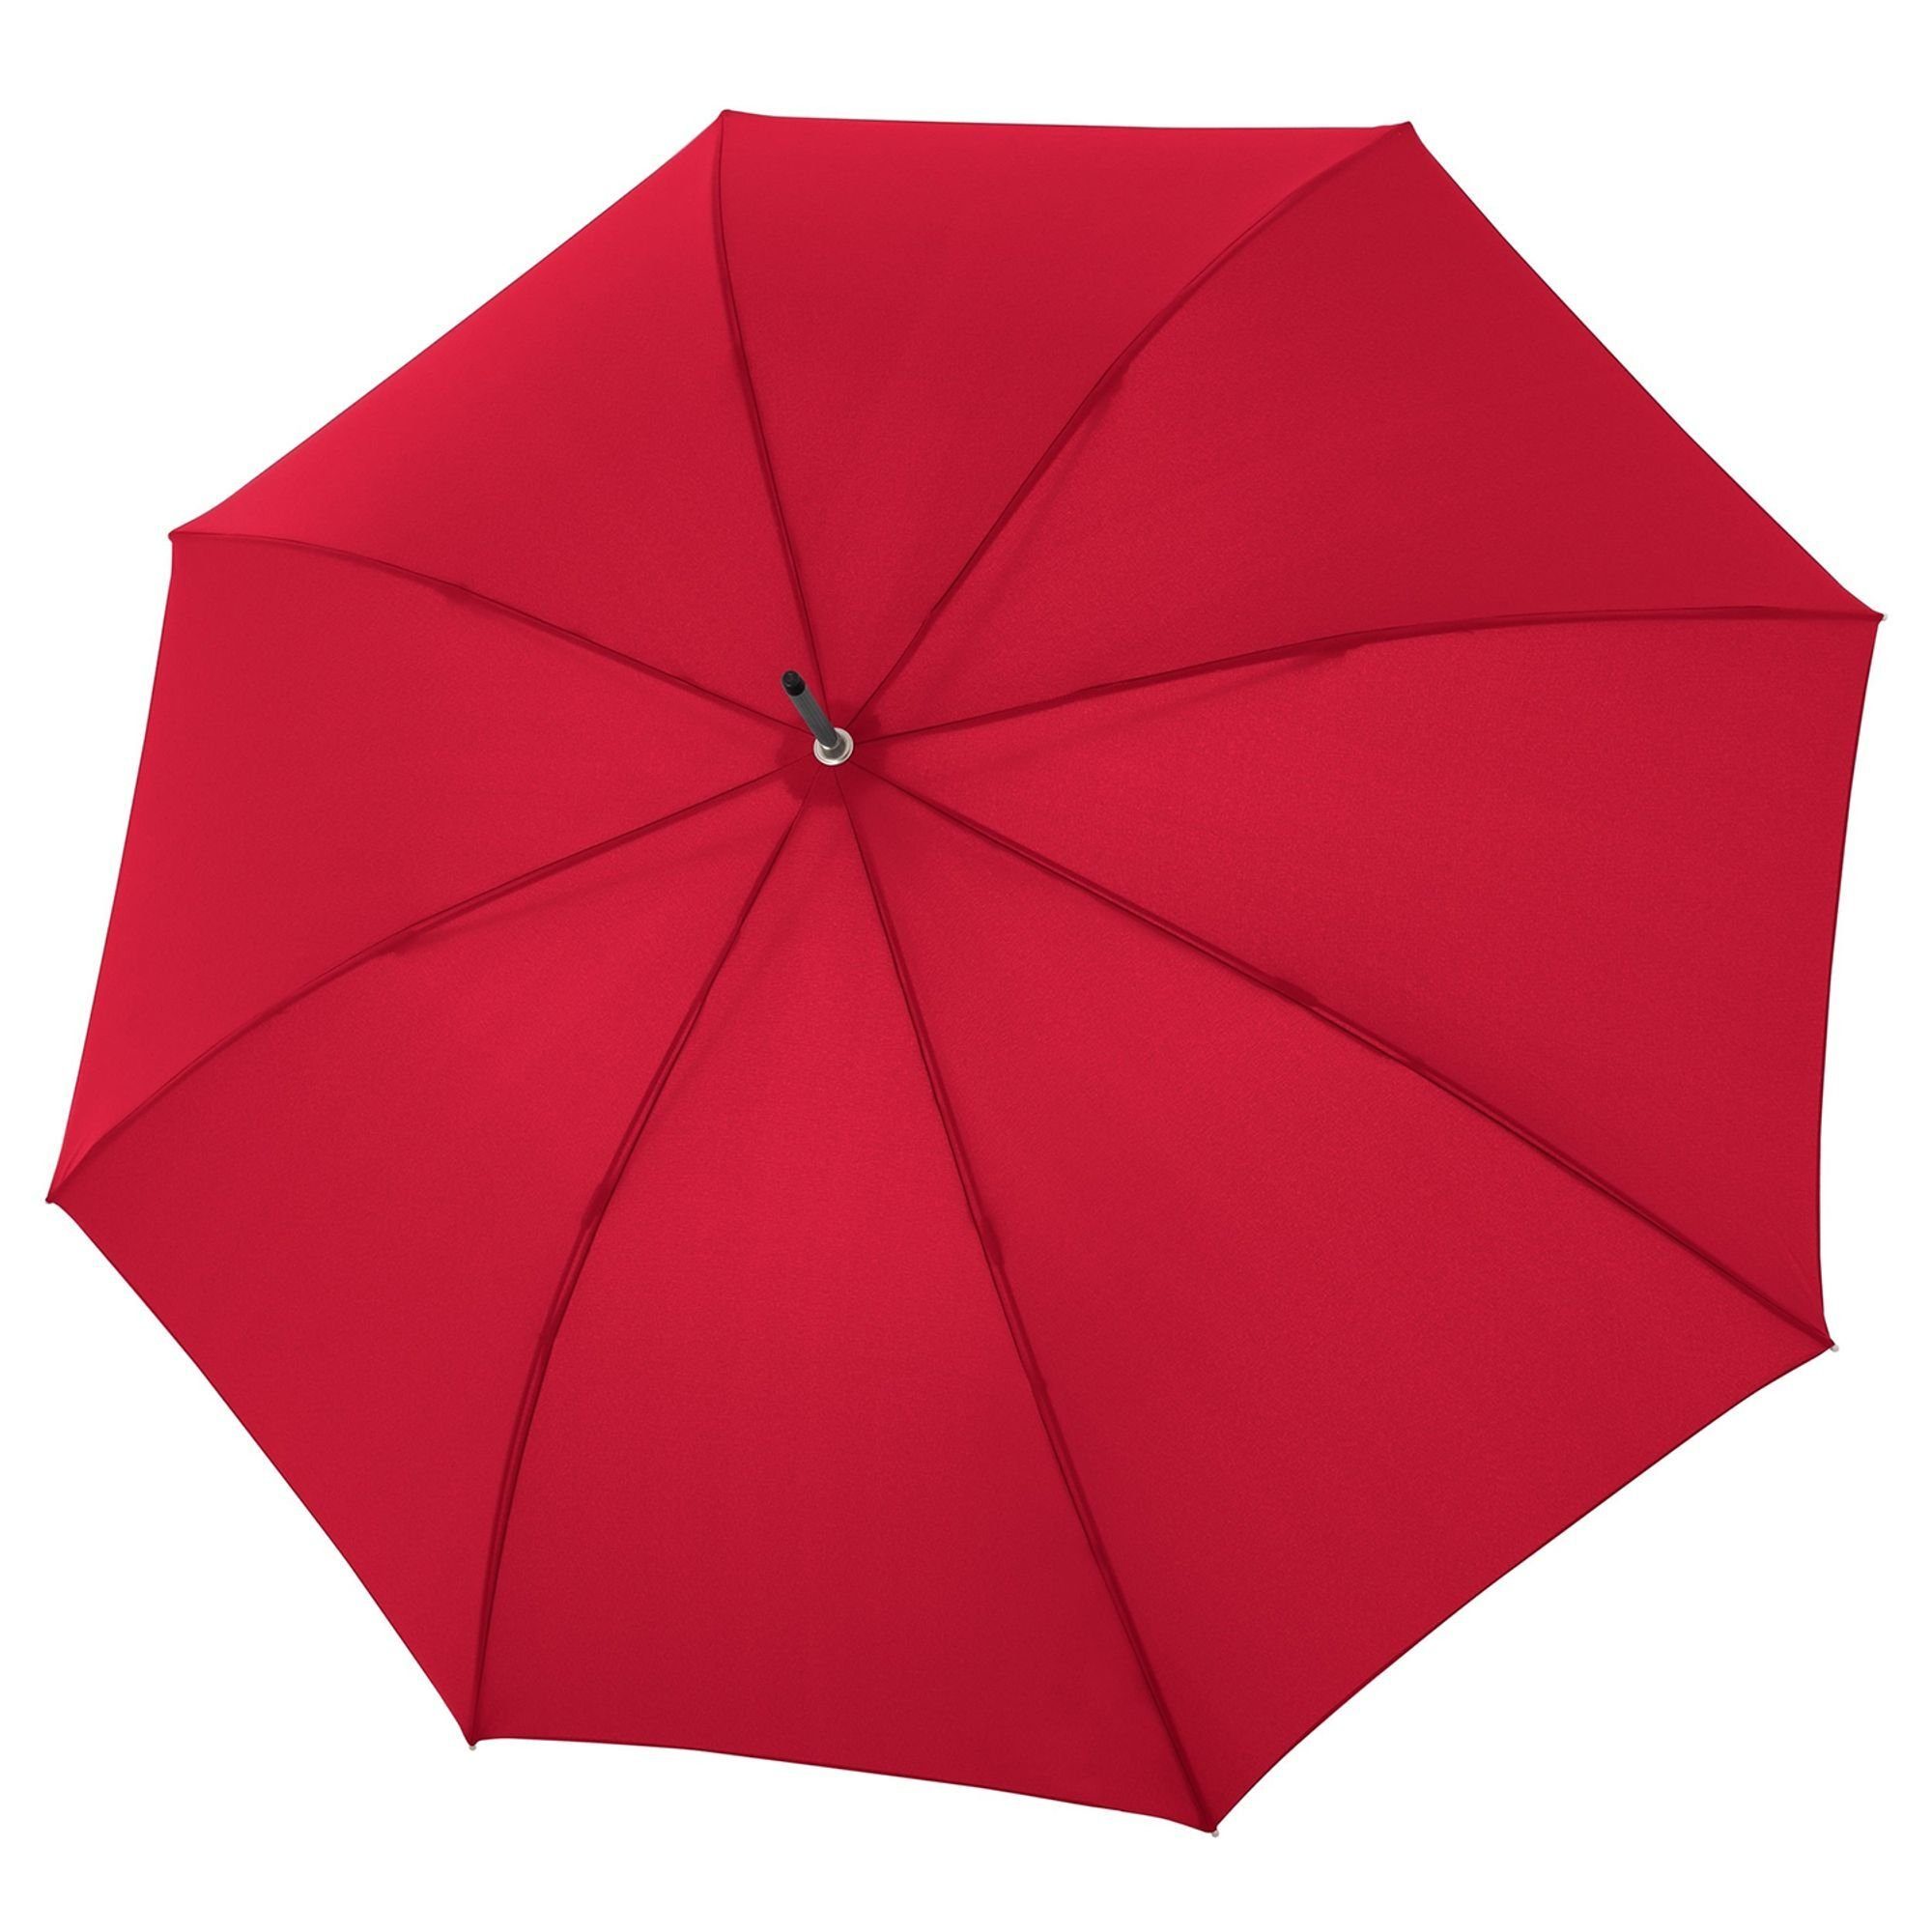 Stockregenschirm red Mia doppler®